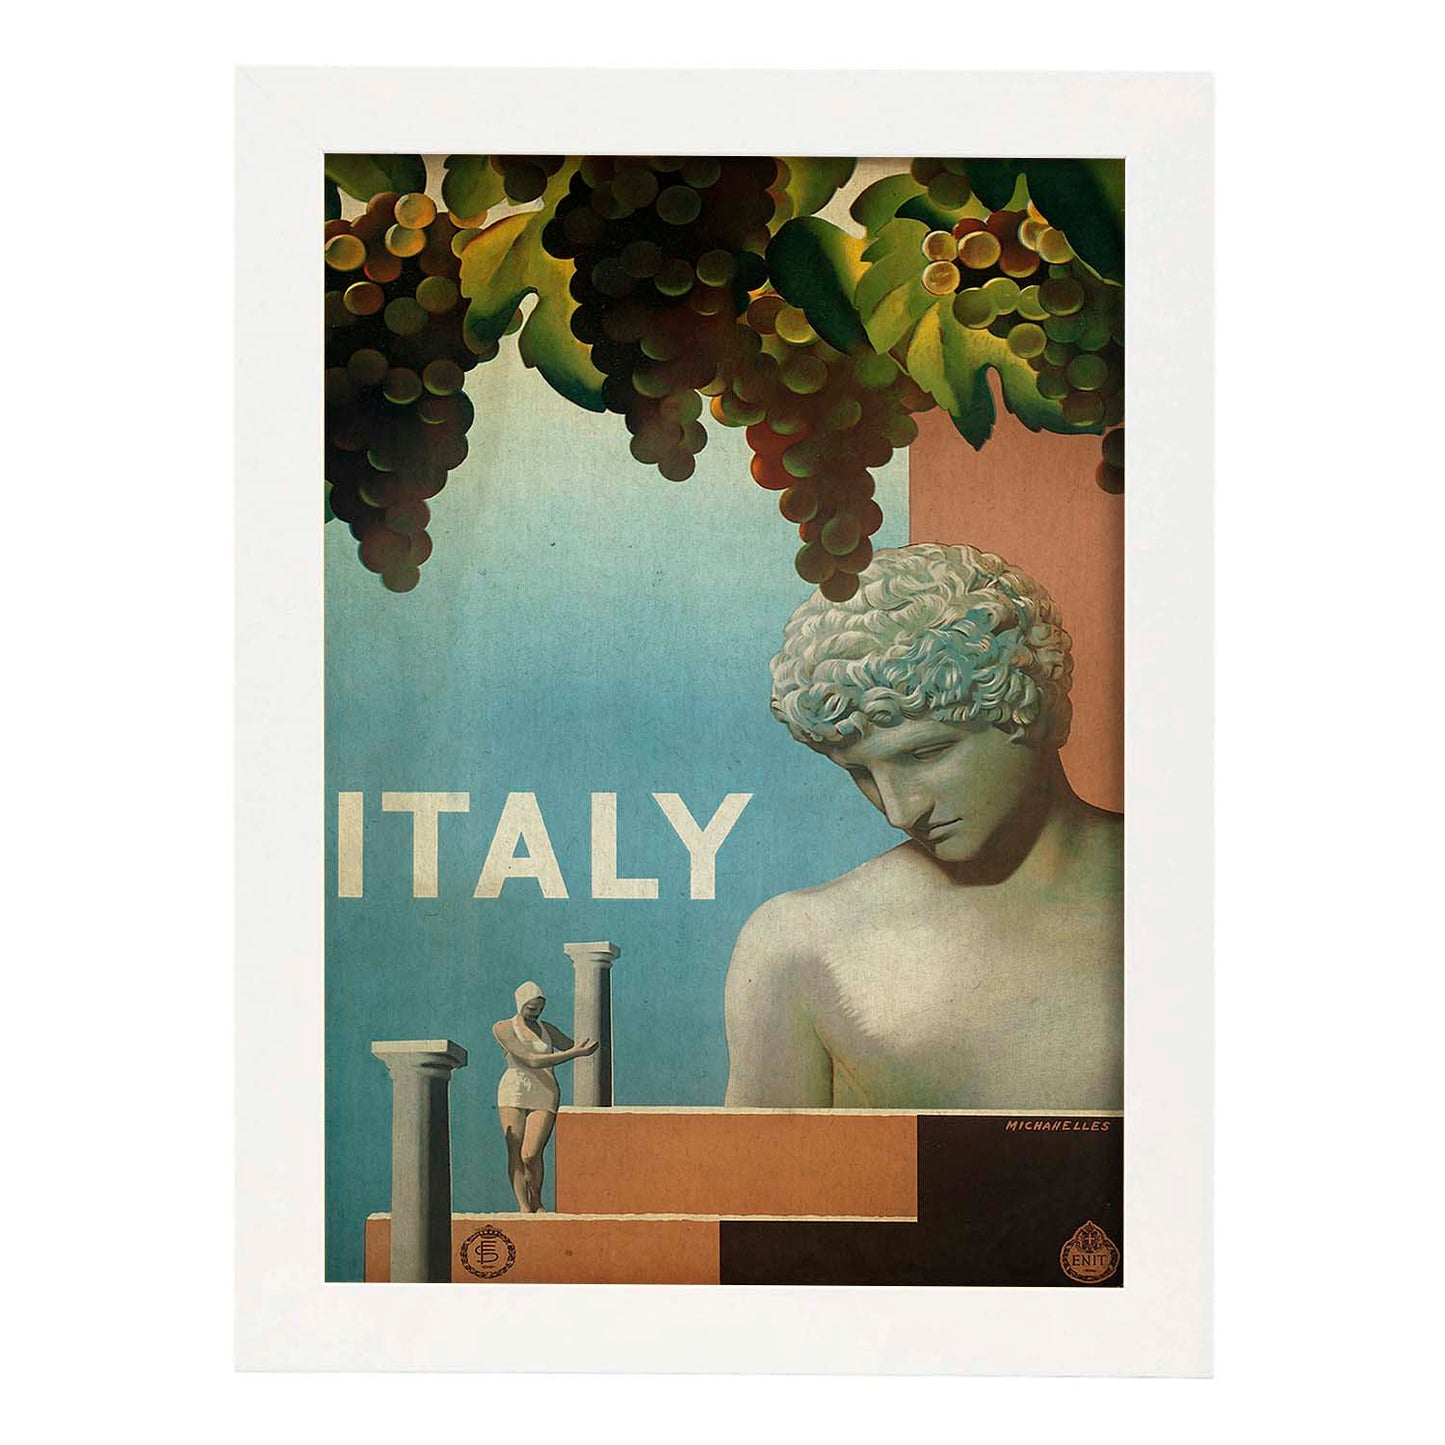 Poster vintage. Cartel vintage de Francia e Italia. Viaja a Italia.-Artwork-Nacnic-A3-Marco Blanco-Nacnic Estudio SL